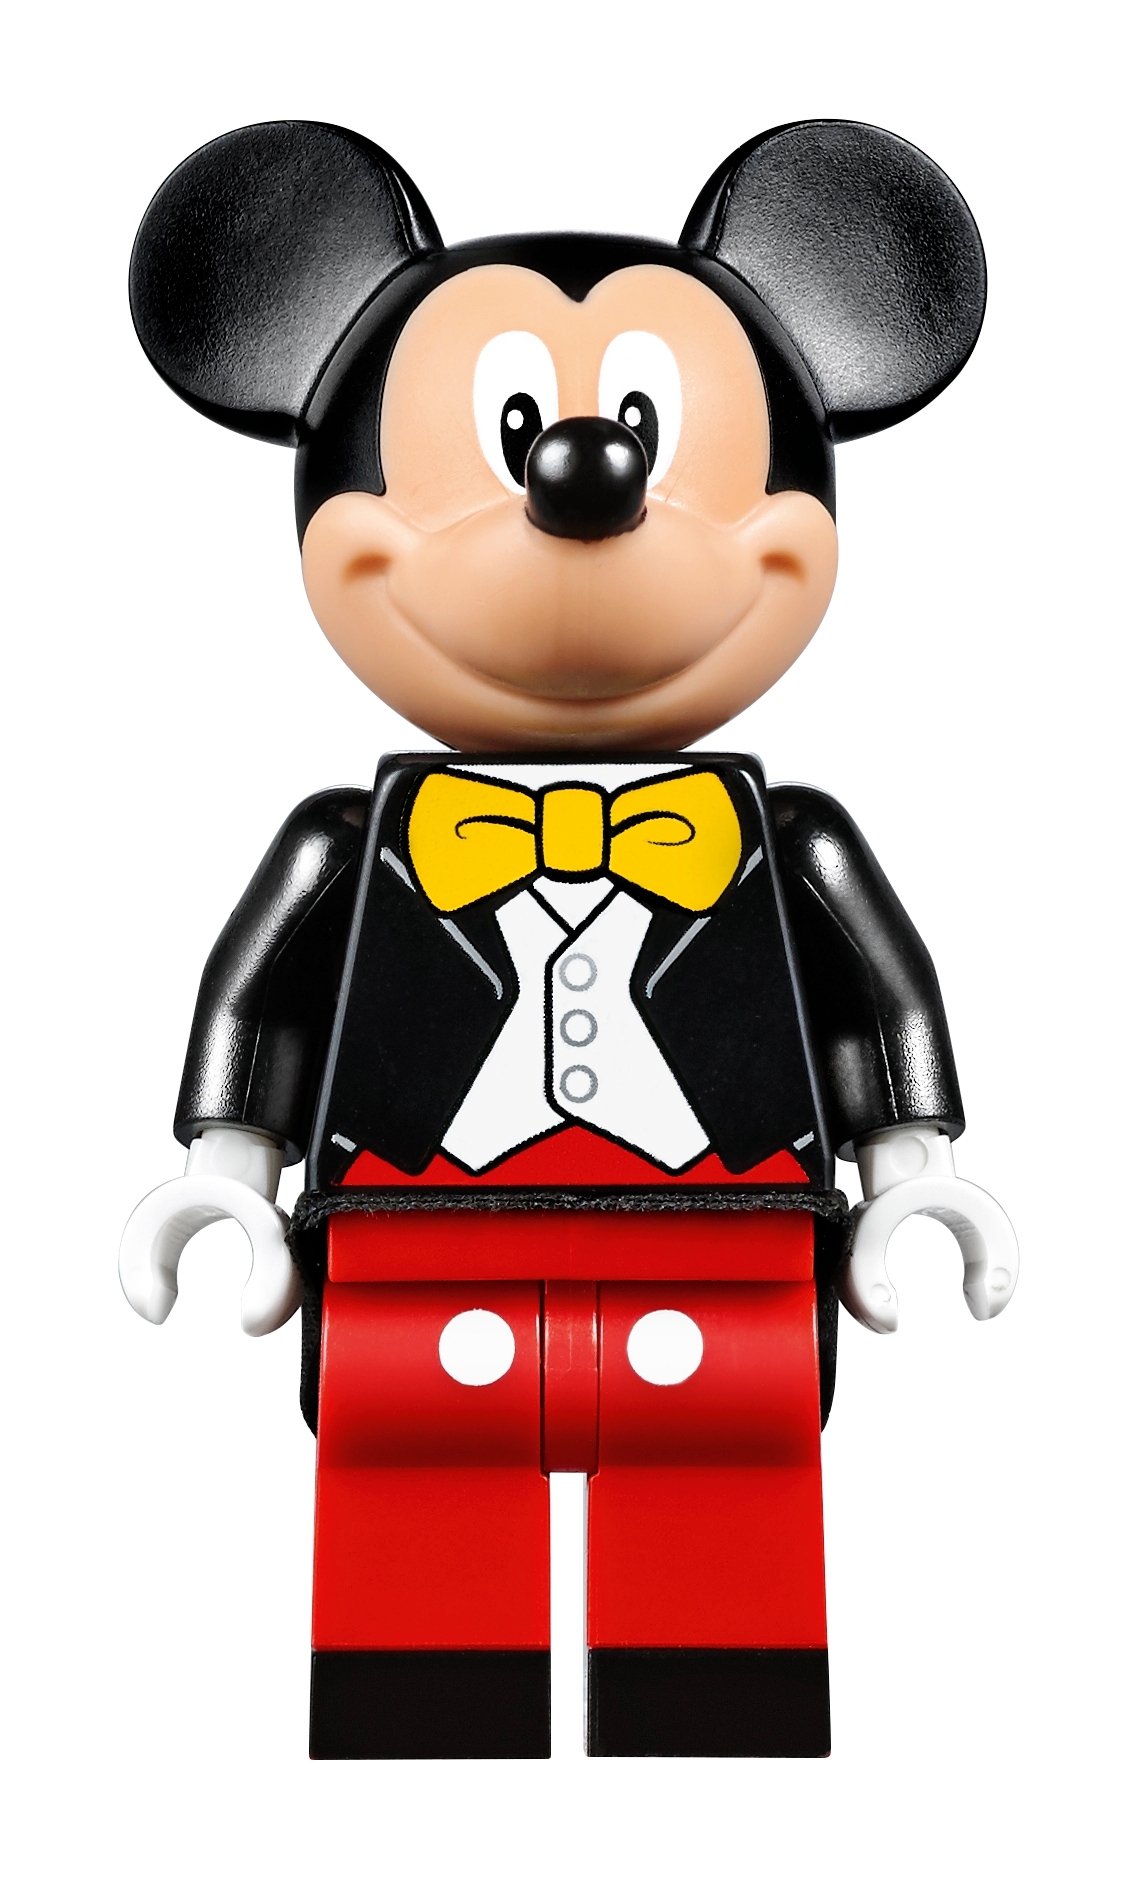 Recensione LEGO 71040 Castello Disney 